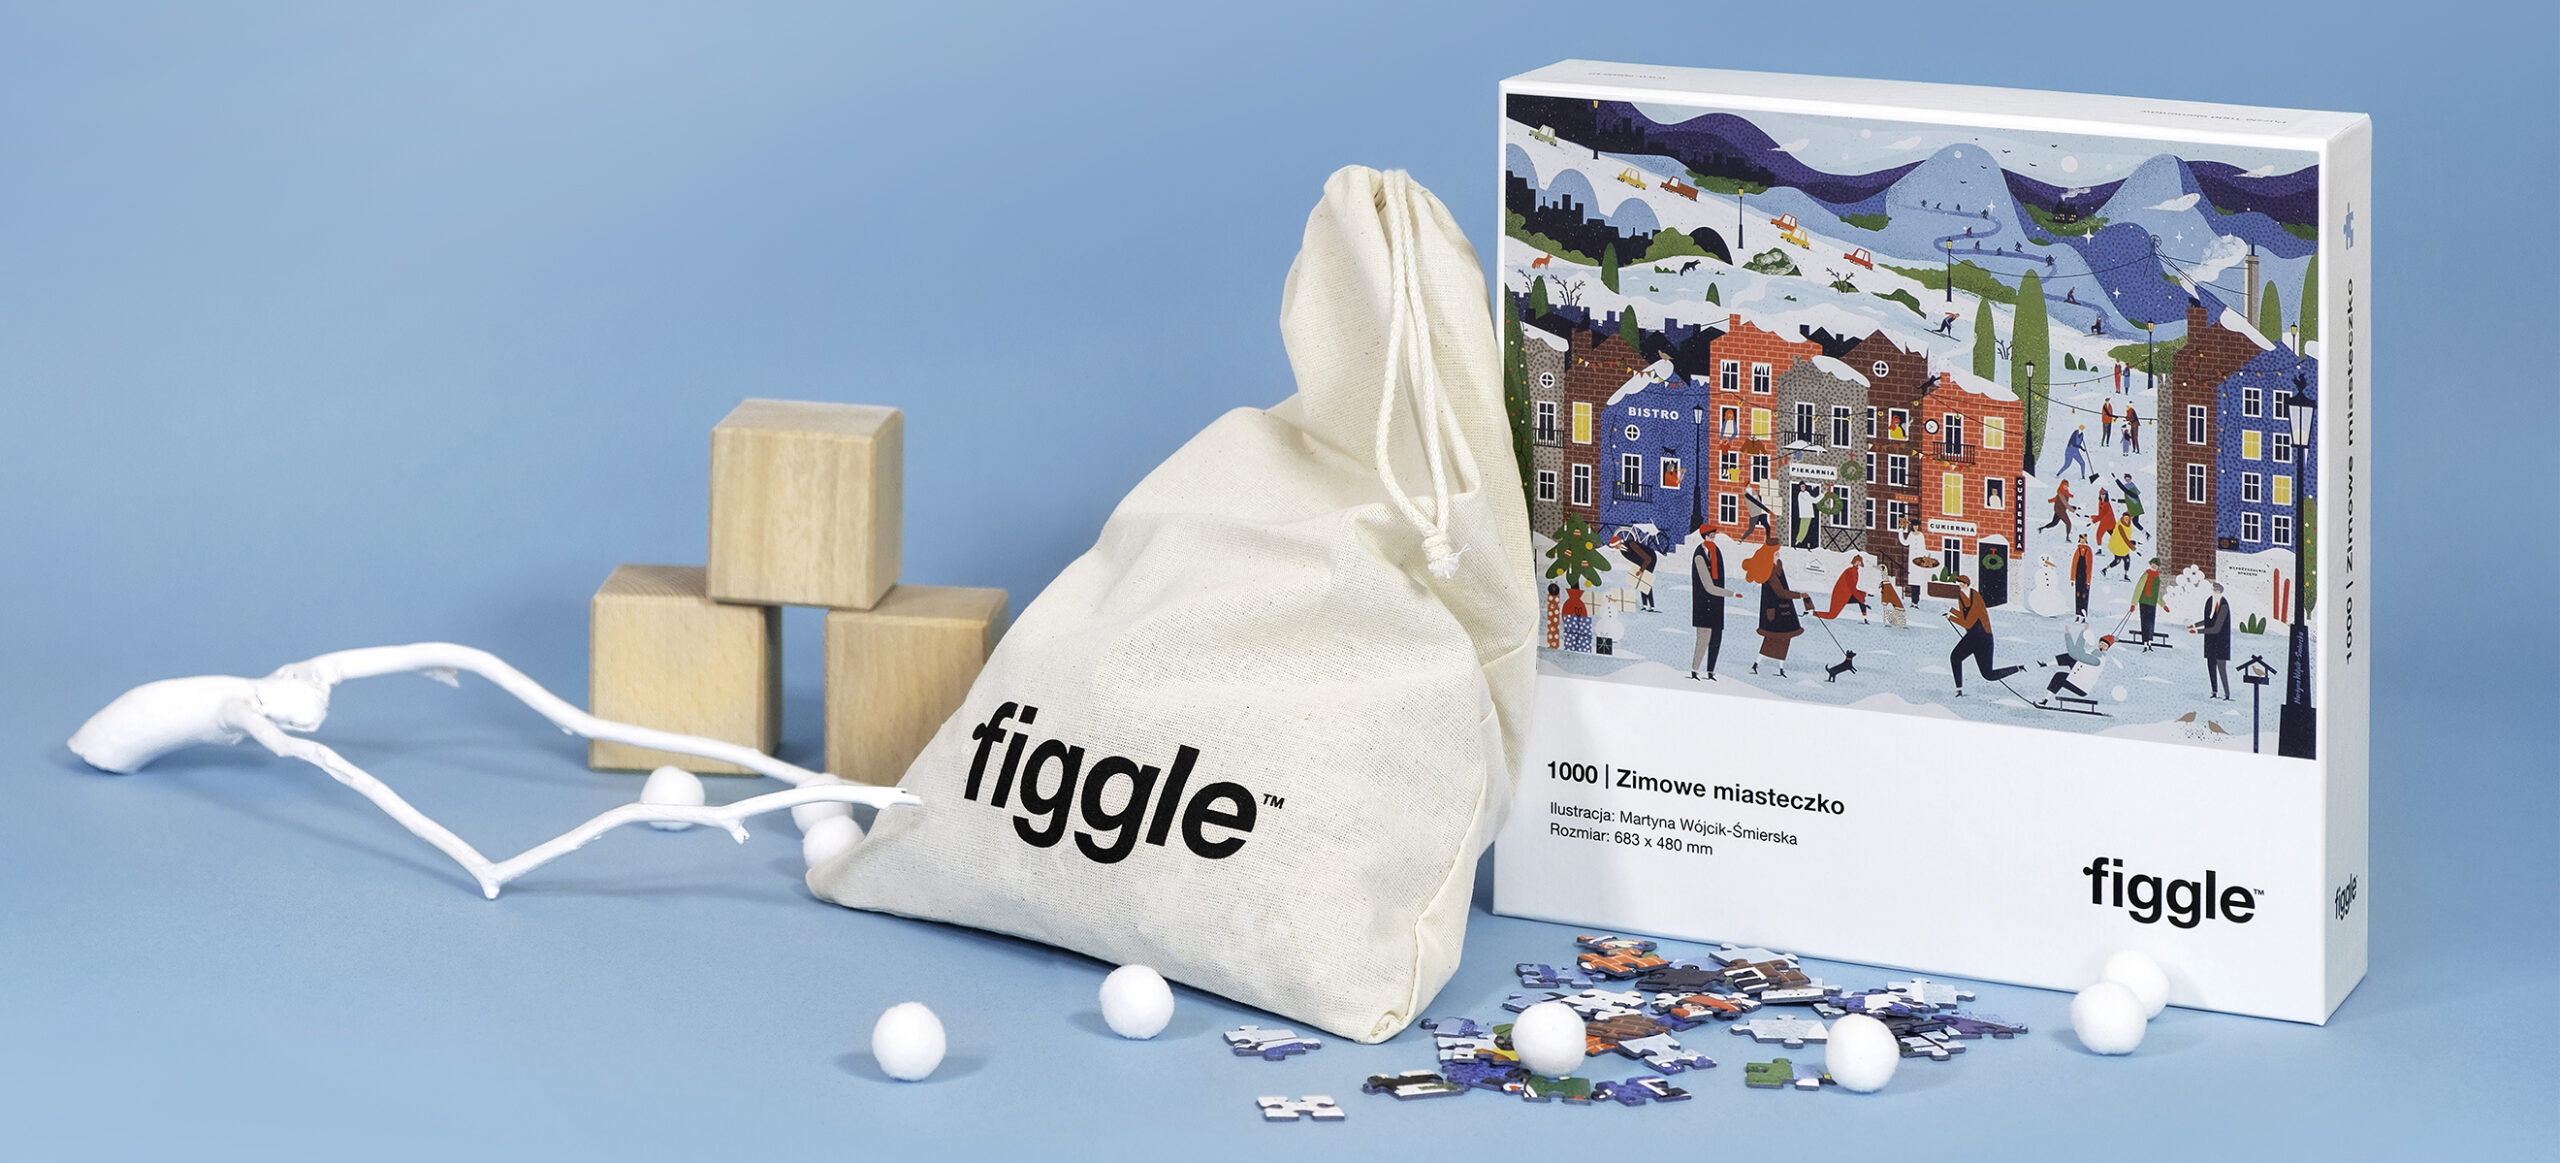 figgle puzzle zimowe miasteczko